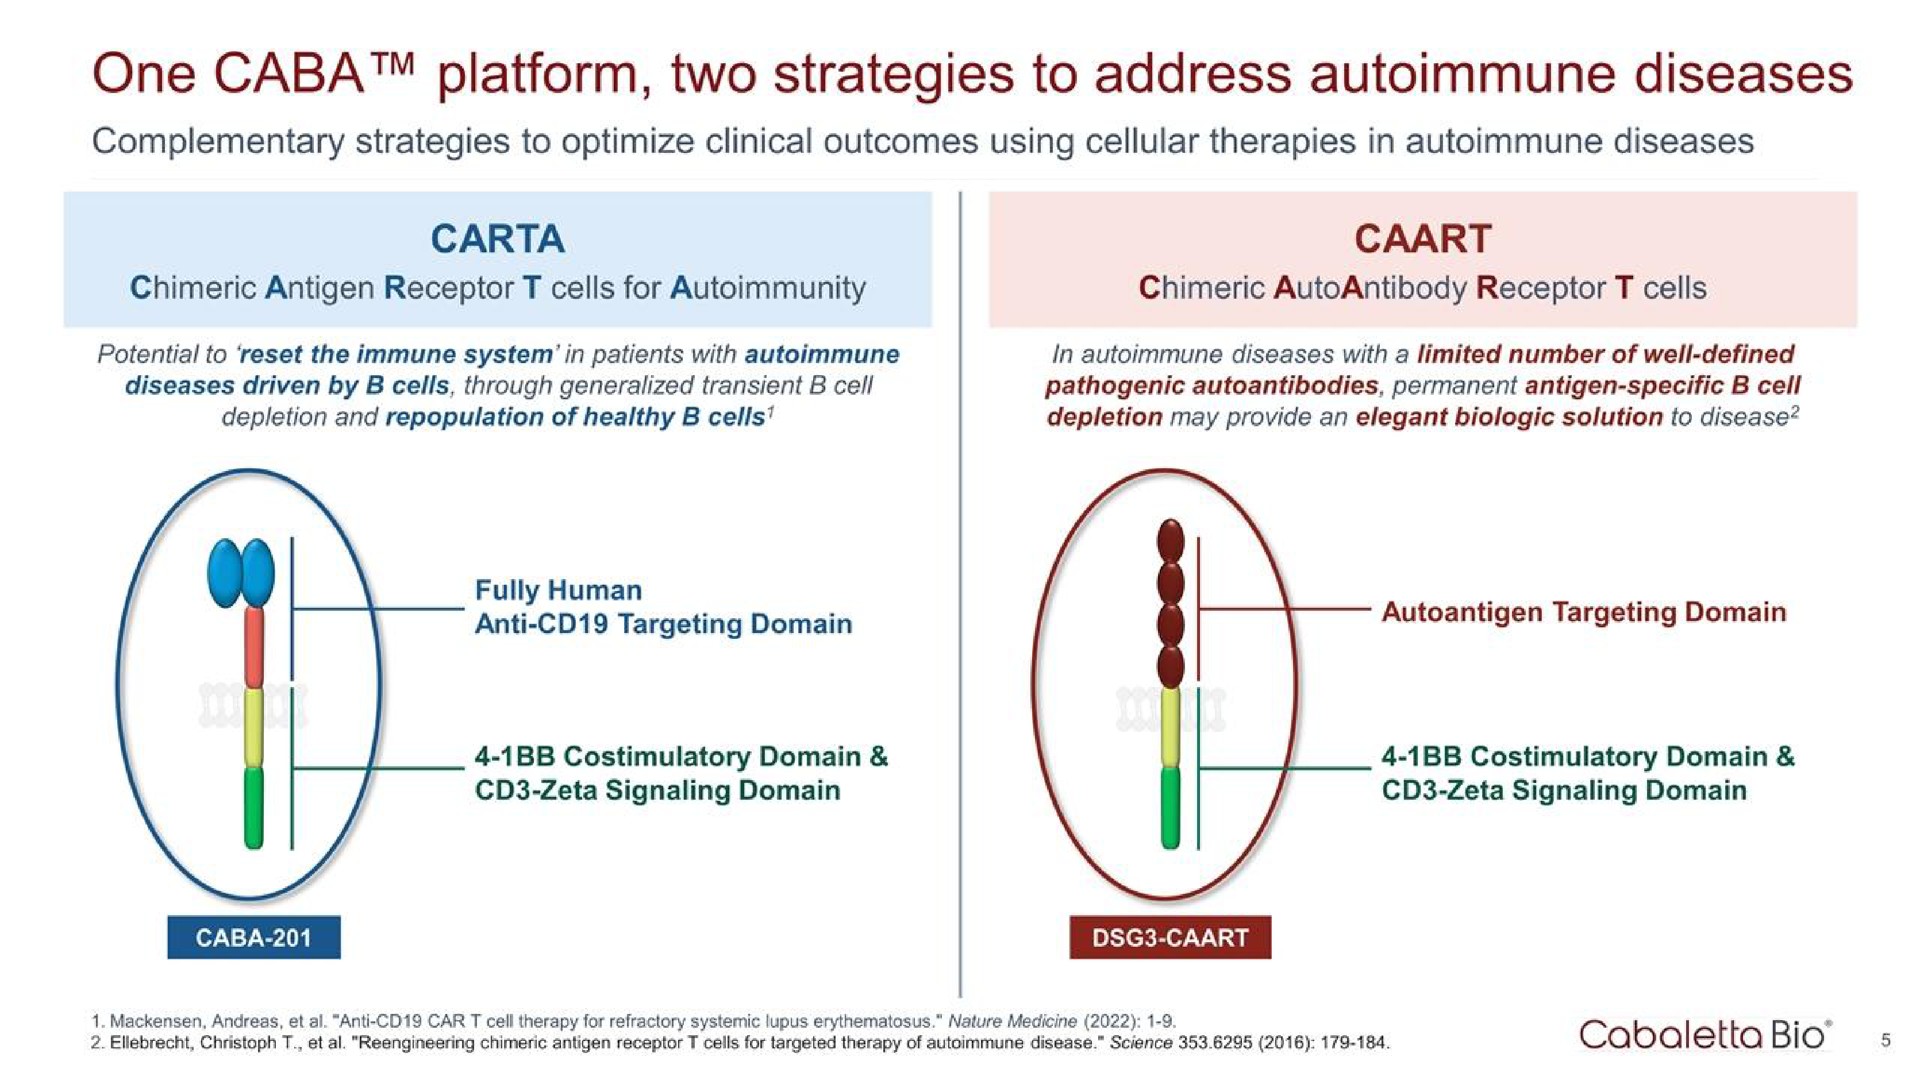 one caba platform two strategies to address diseases | Cabaletta Bio